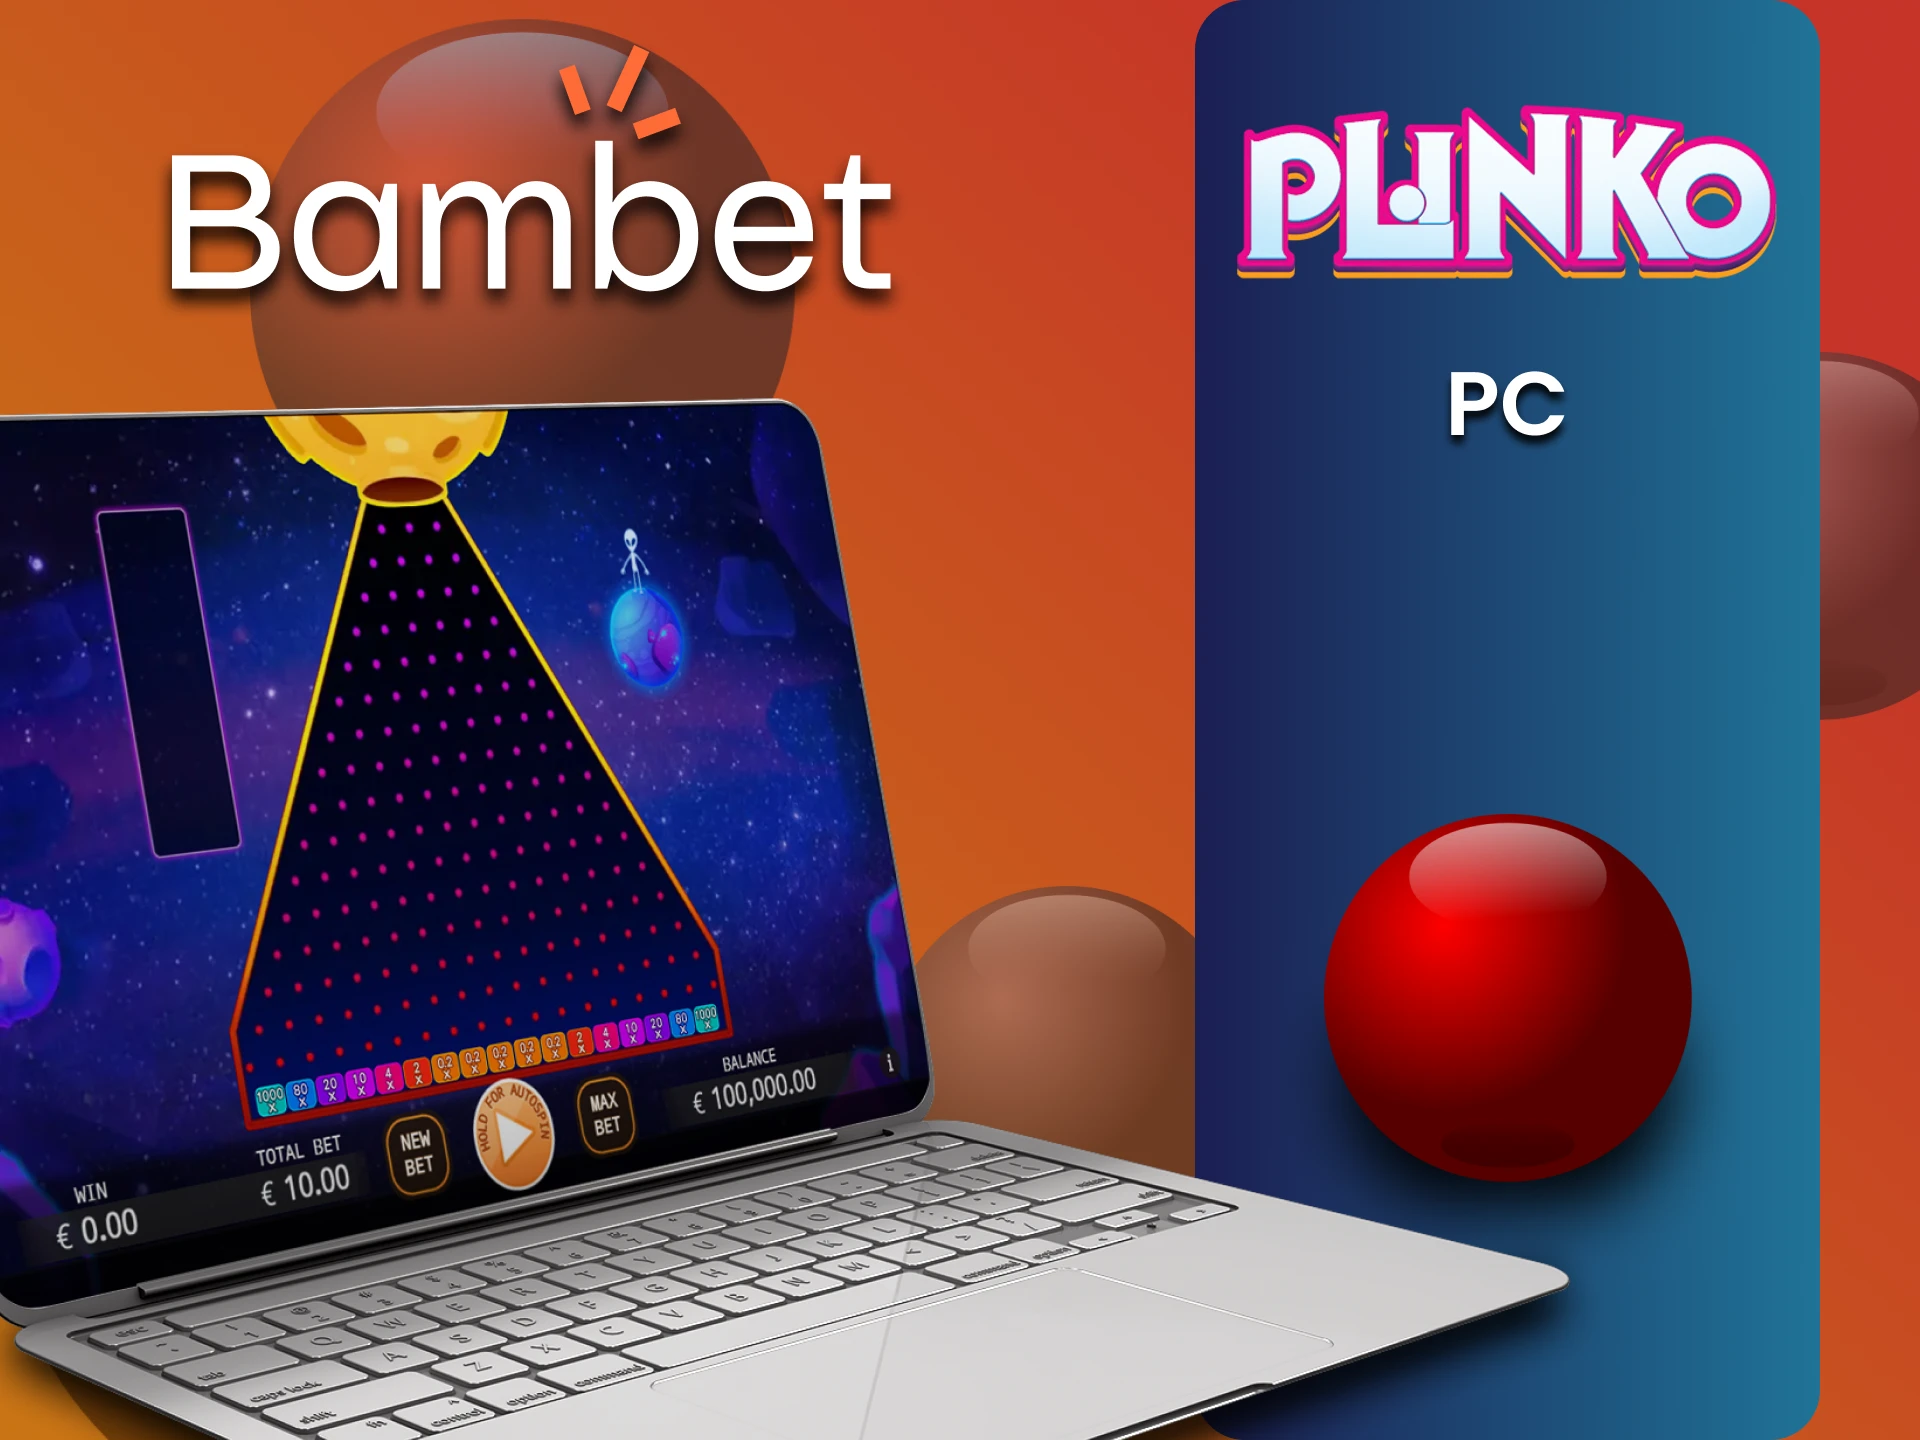 Play Plinko on Bambet via PC.